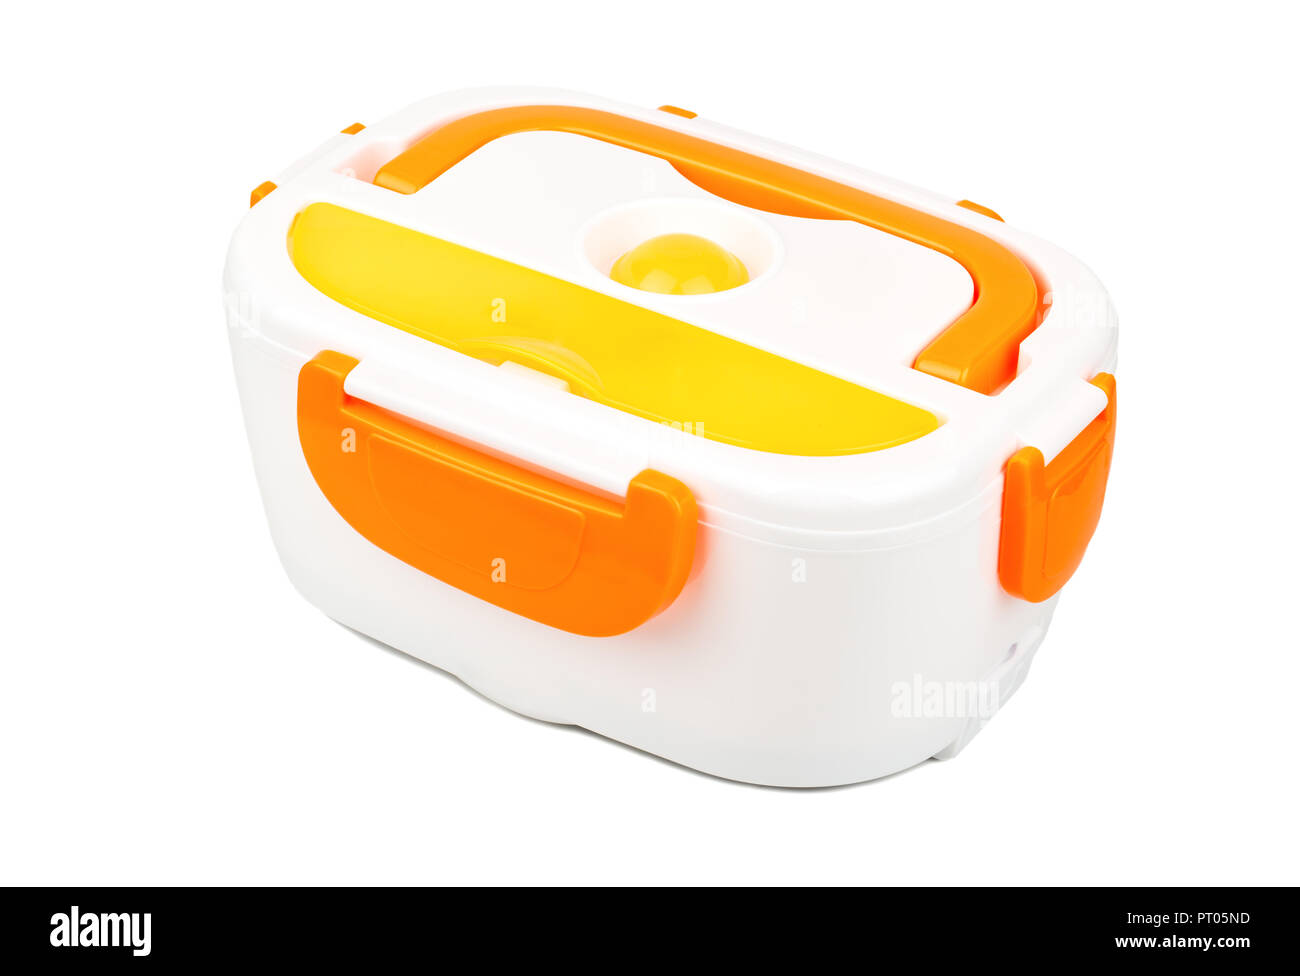 https://c8.alamy.com/comp/PT05ND/orange-plastic-lunch-box-isolated-on-white-background-PT05ND.jpg